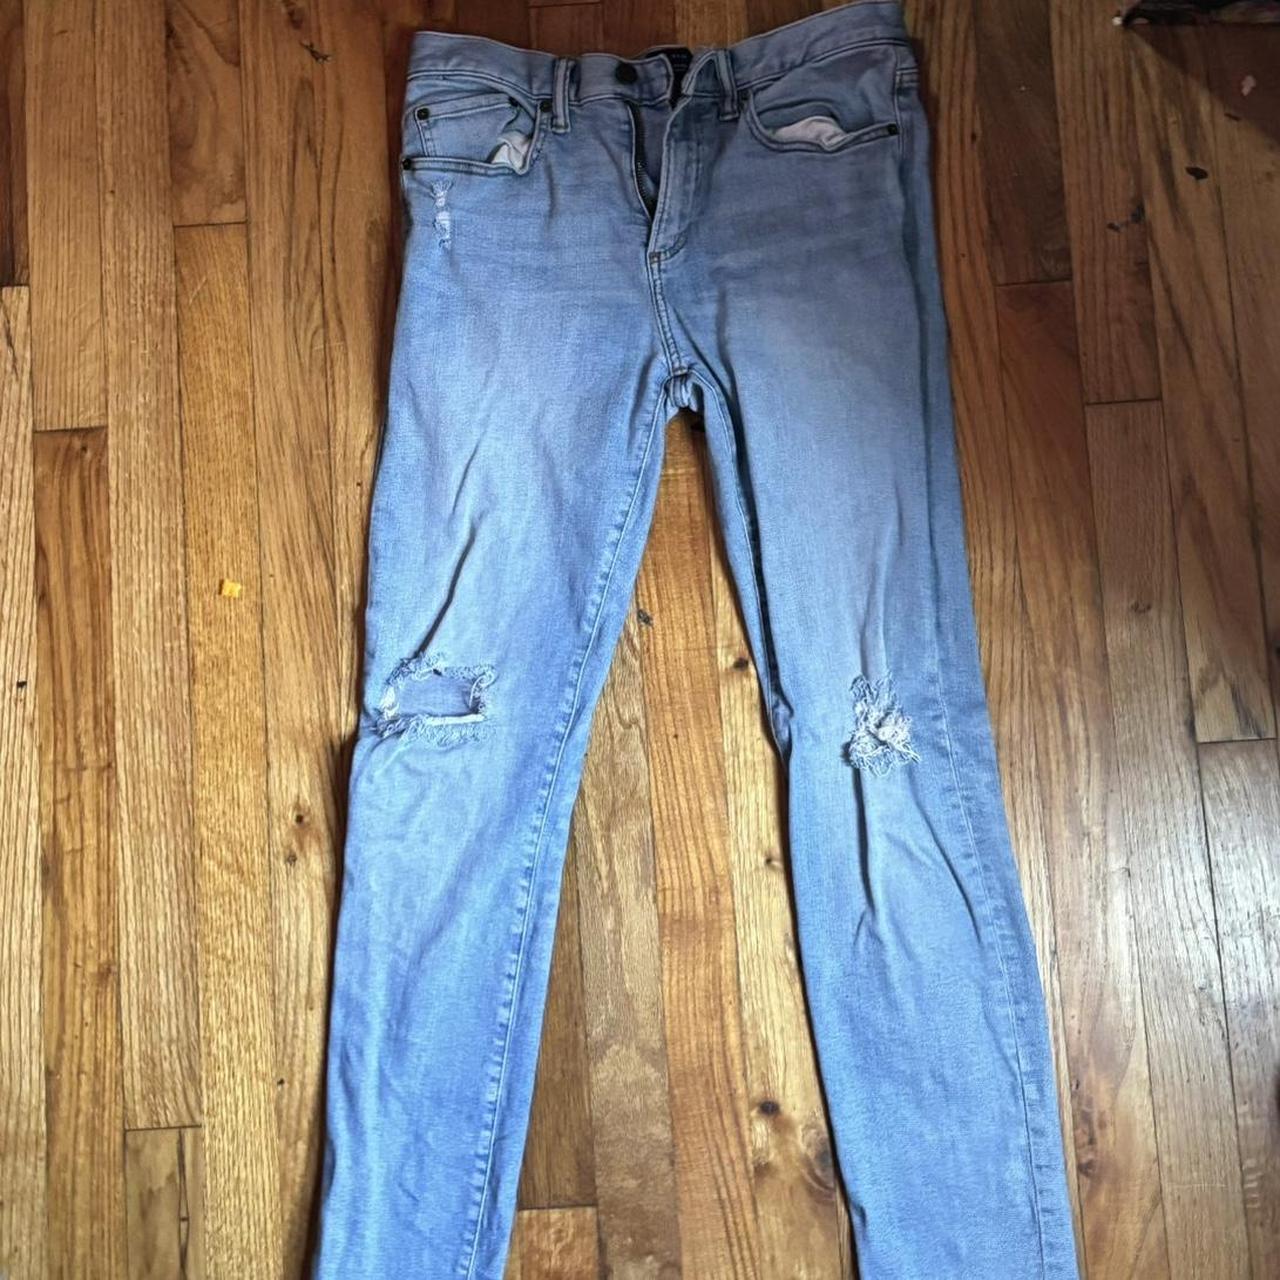 gap denim light blue skinny jeans 31x32 Slightly... - Depop